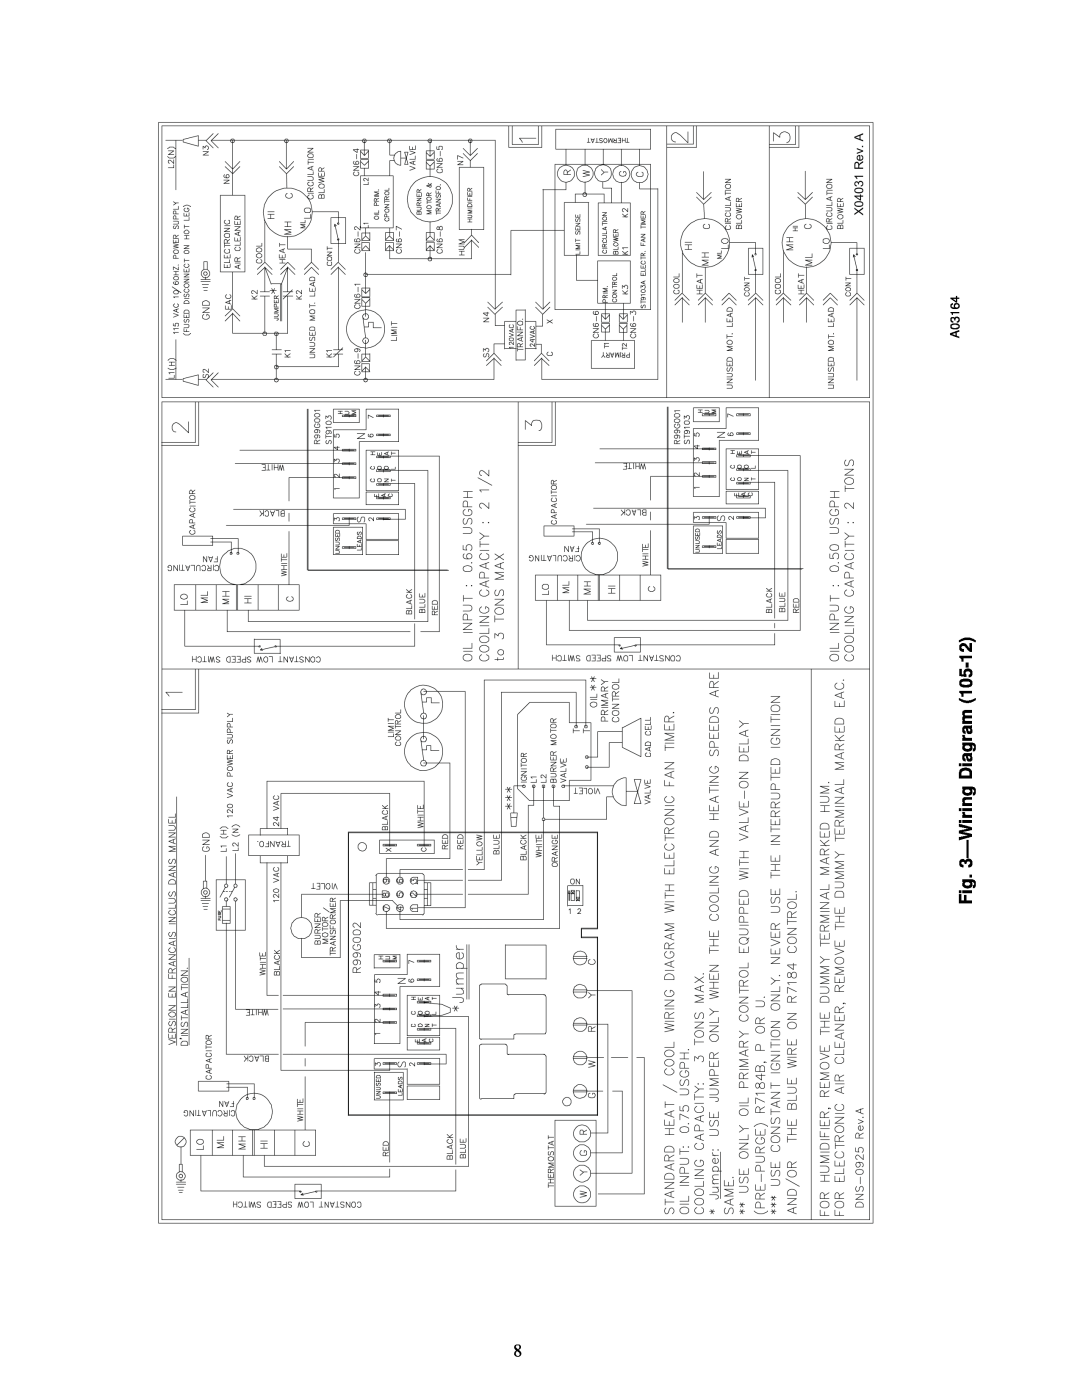 Carrier 58CMA instruction manual WiringDiagram, X04031 Rev. A, A03164 